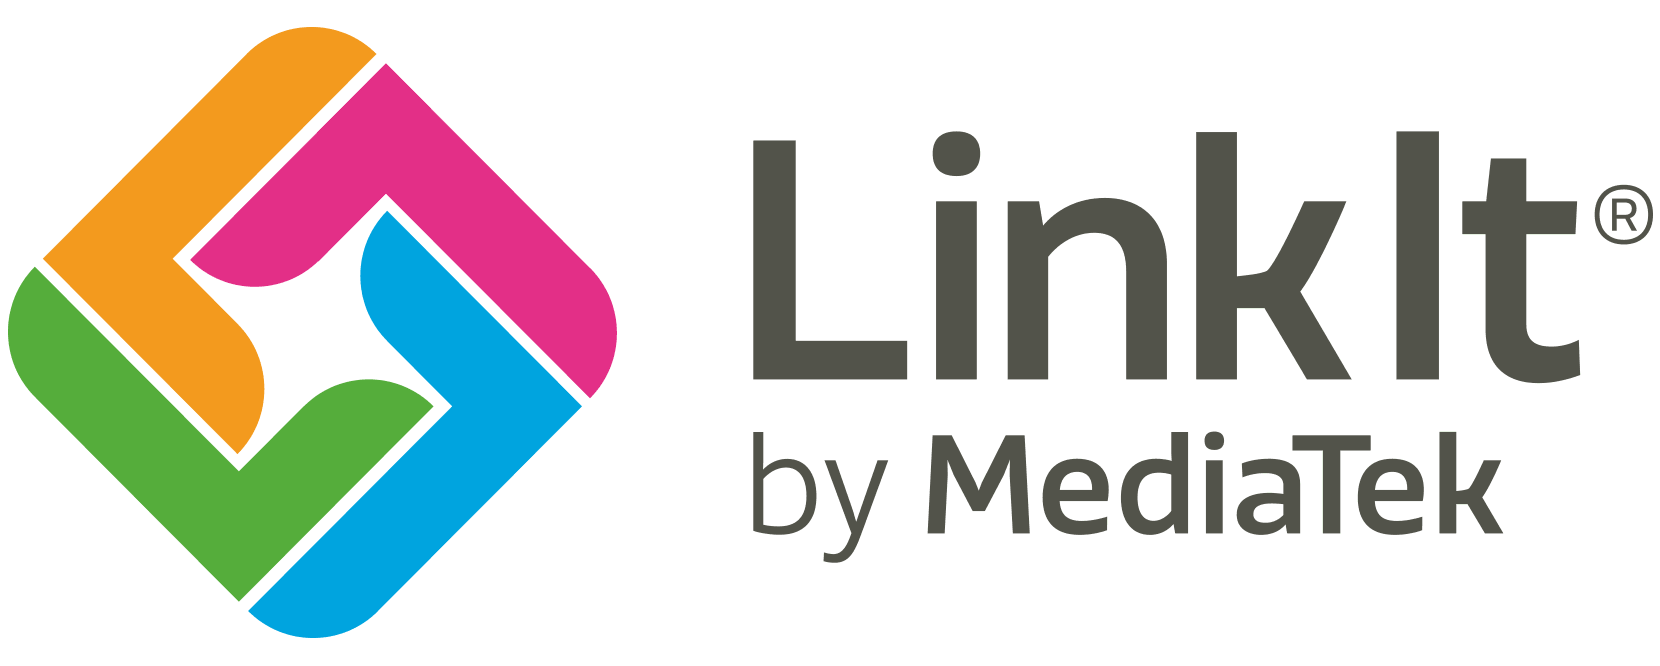 MediaTek Logo - MediaTek Linkit logo. IT Eco Map & News Navigator